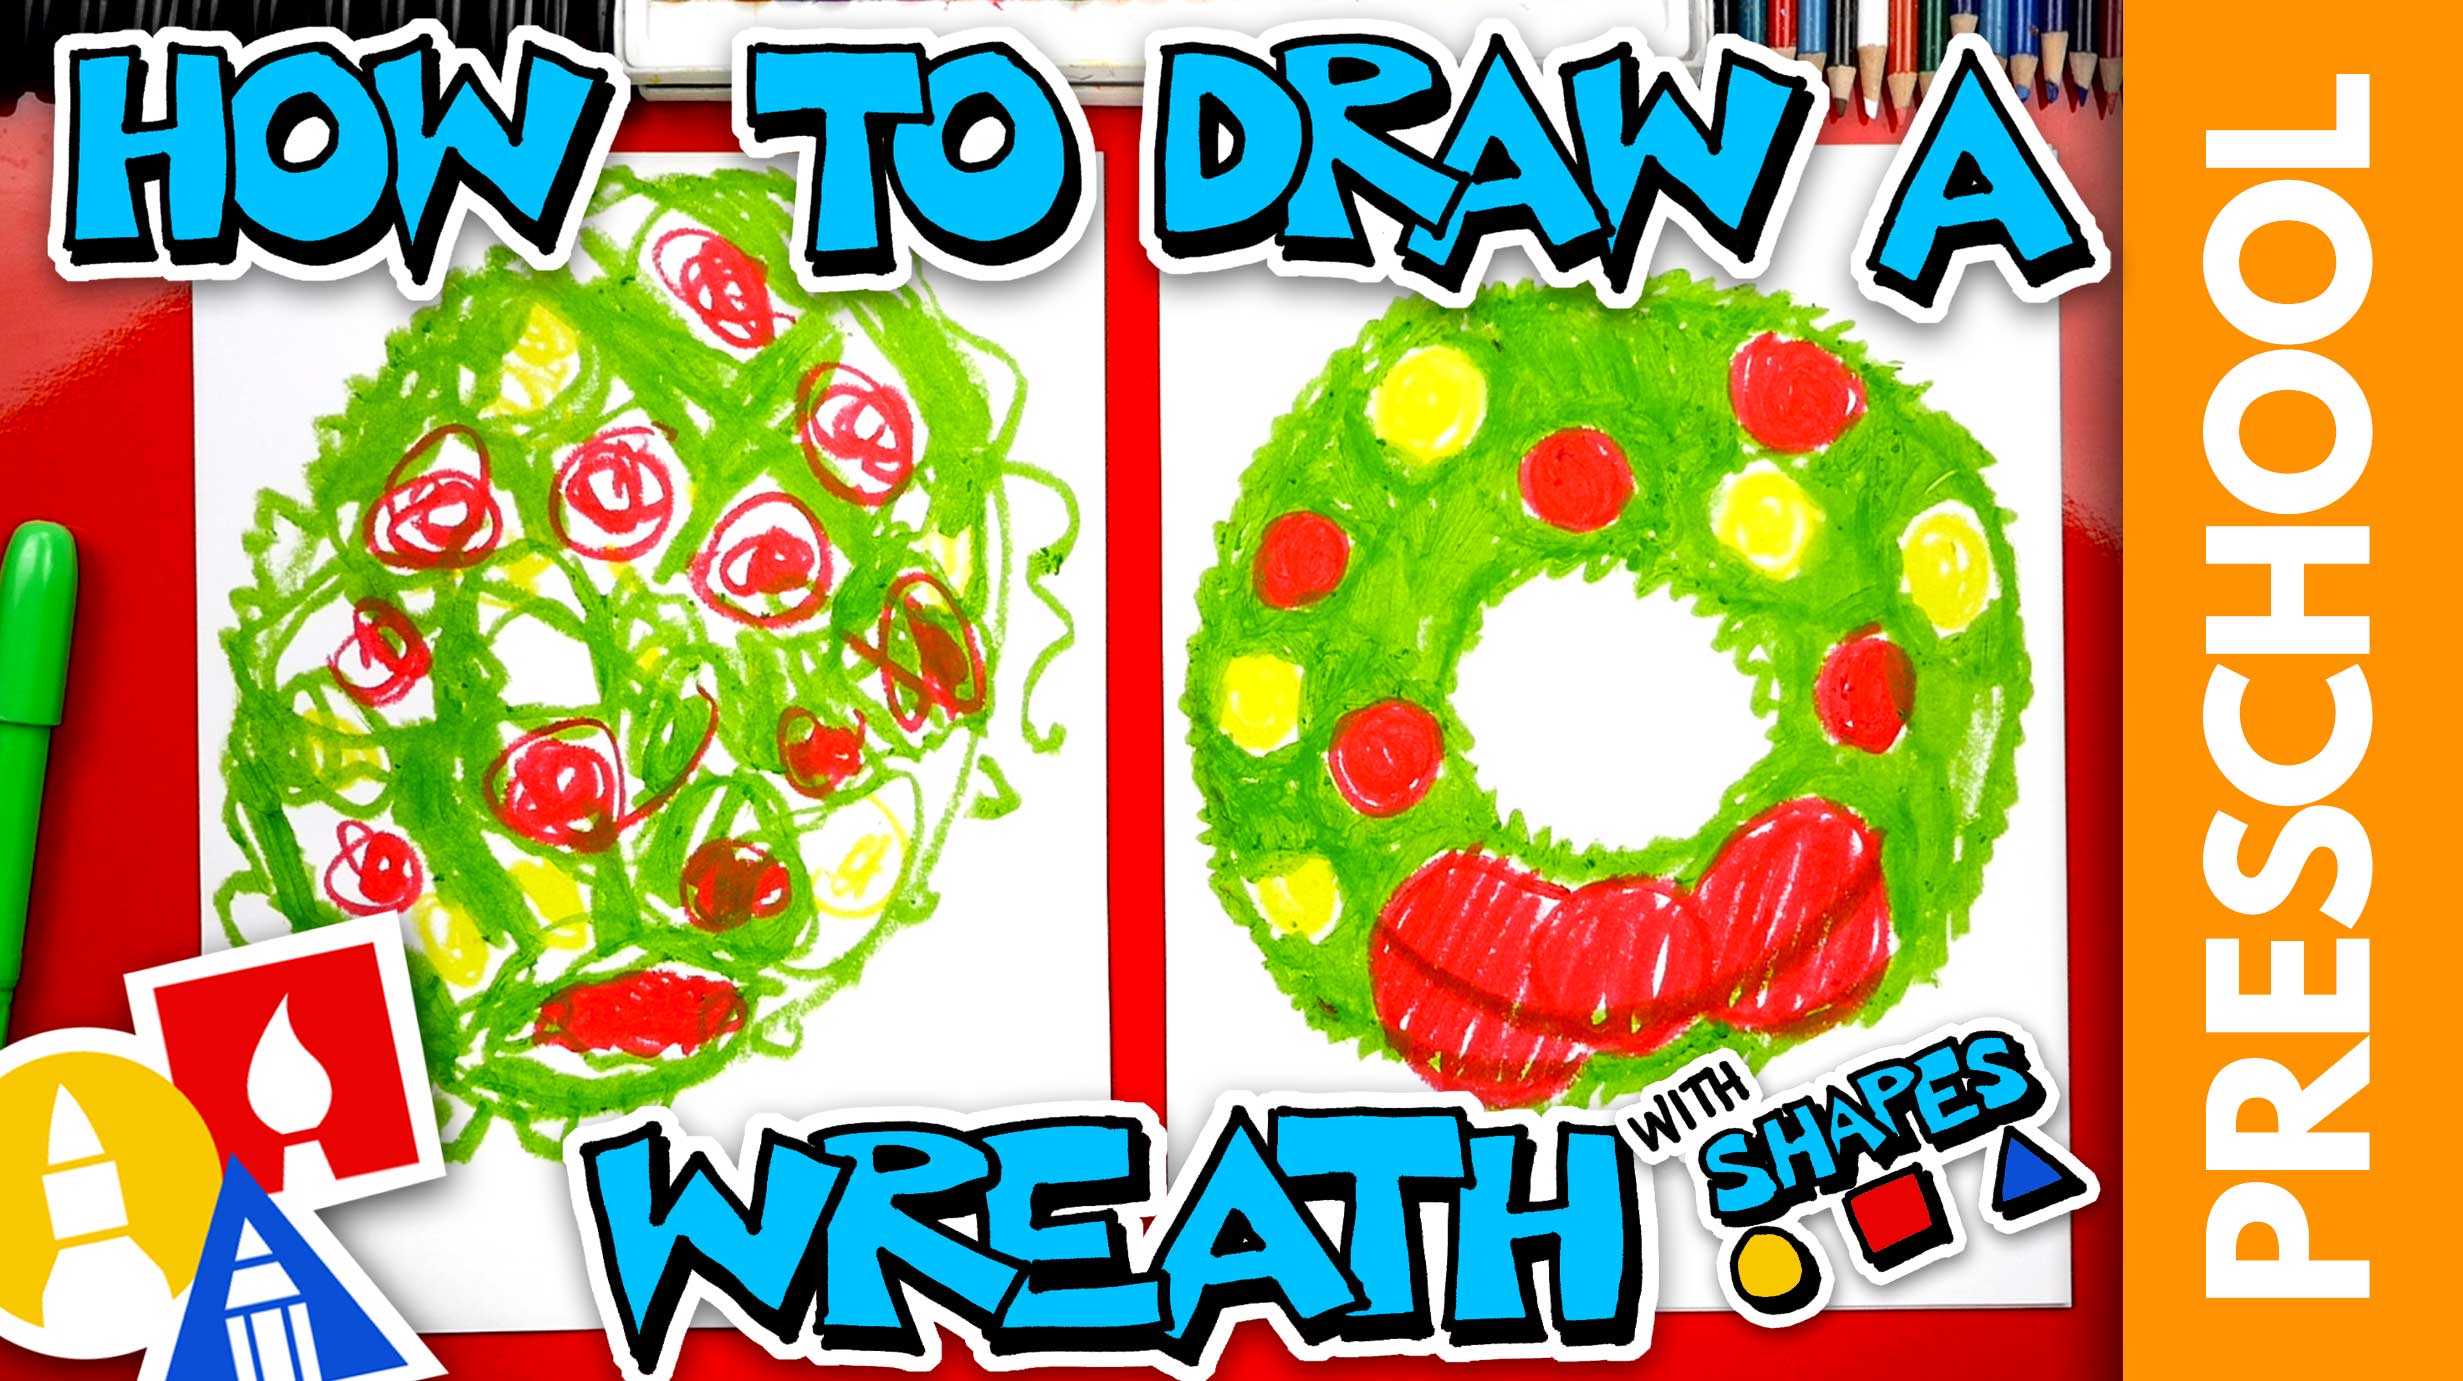 How To Draw A Holiday Wreath - Preschool - Art For Kids Hub